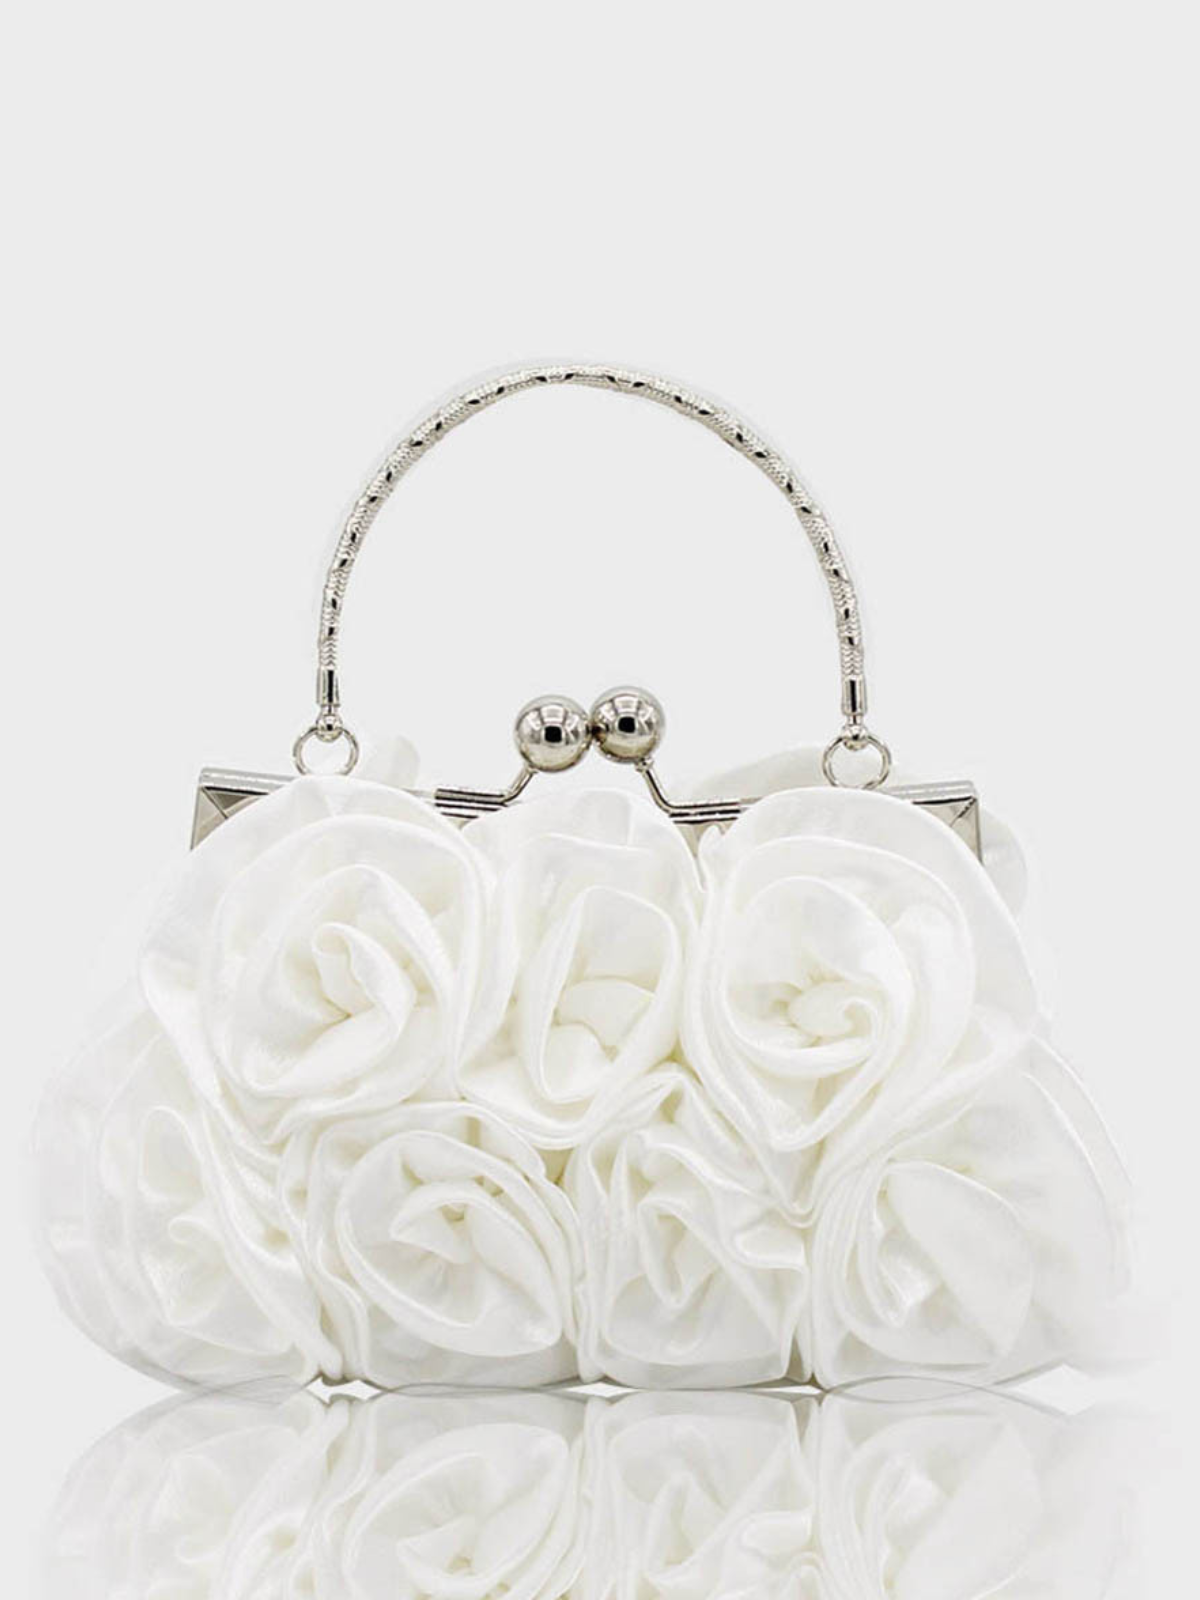 Girls Formal Accessories | Elegant White Rosette Clutch Purse Handbag